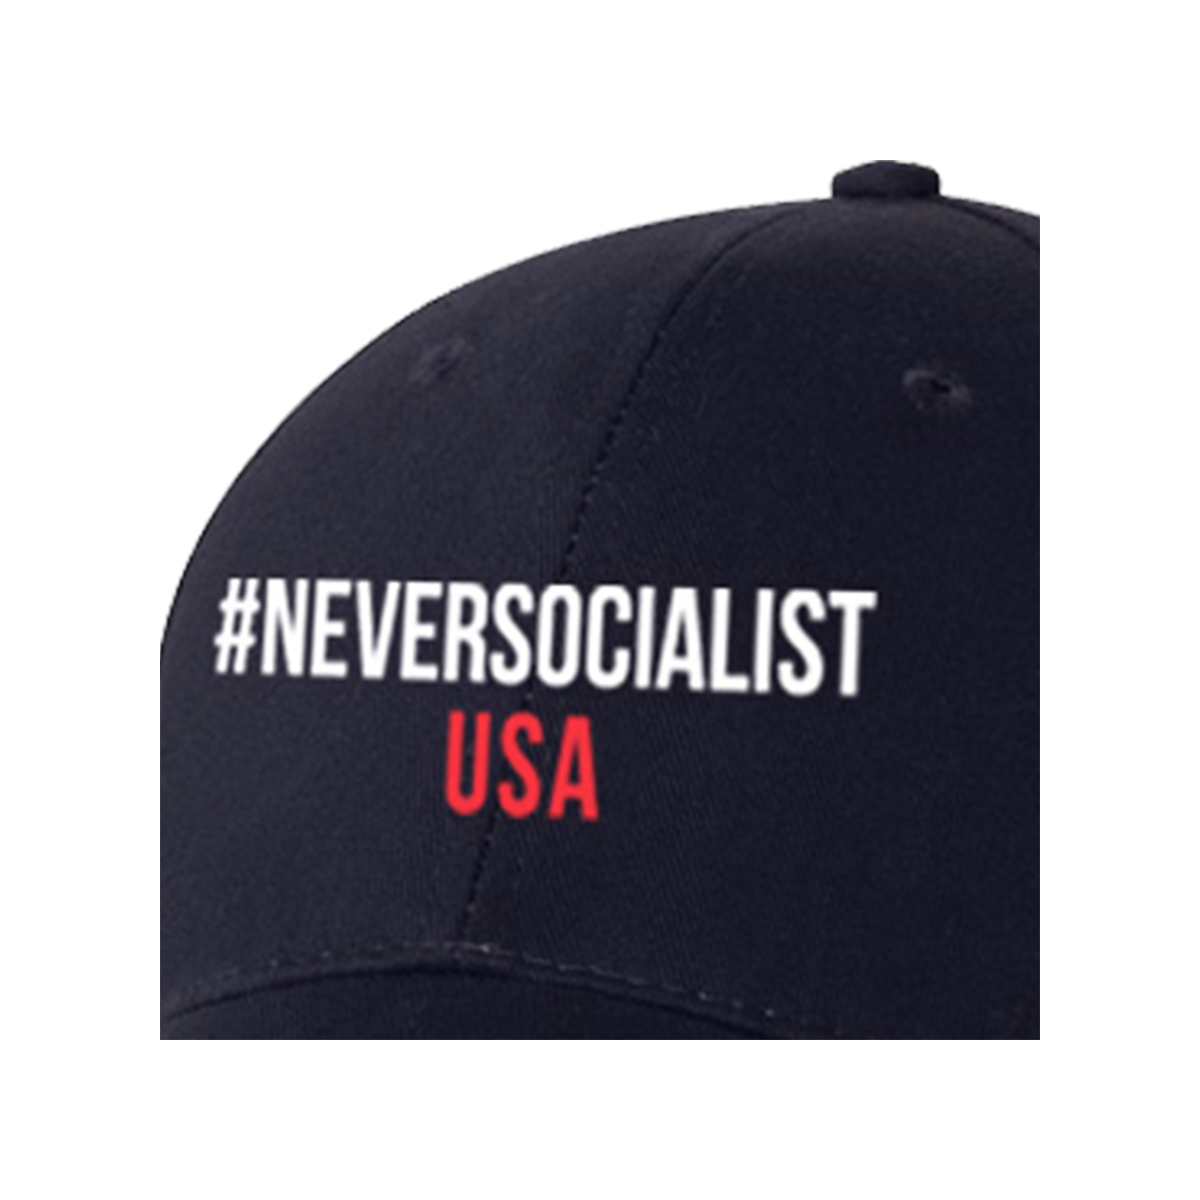 NeverSocialist USA Hat Navy